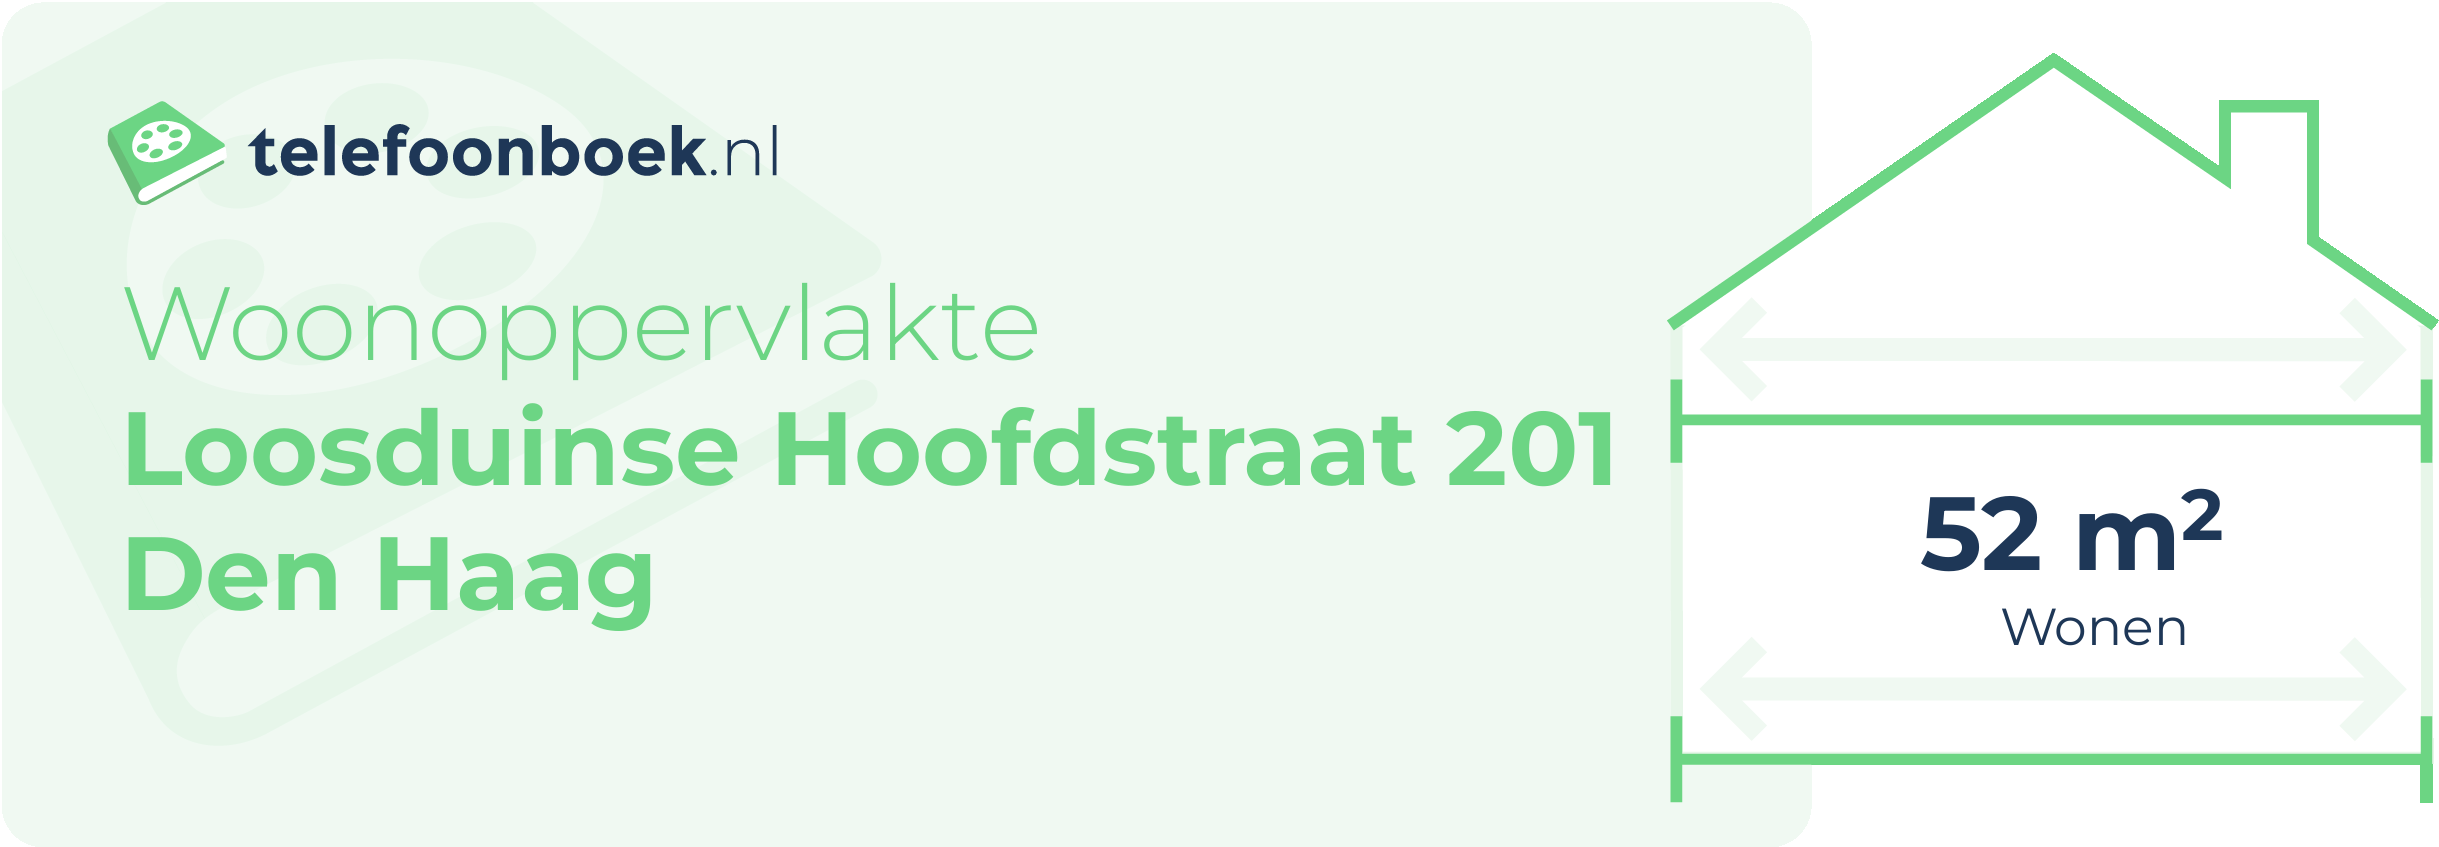 Woonoppervlakte Loosduinse Hoofdstraat 201 Den Haag